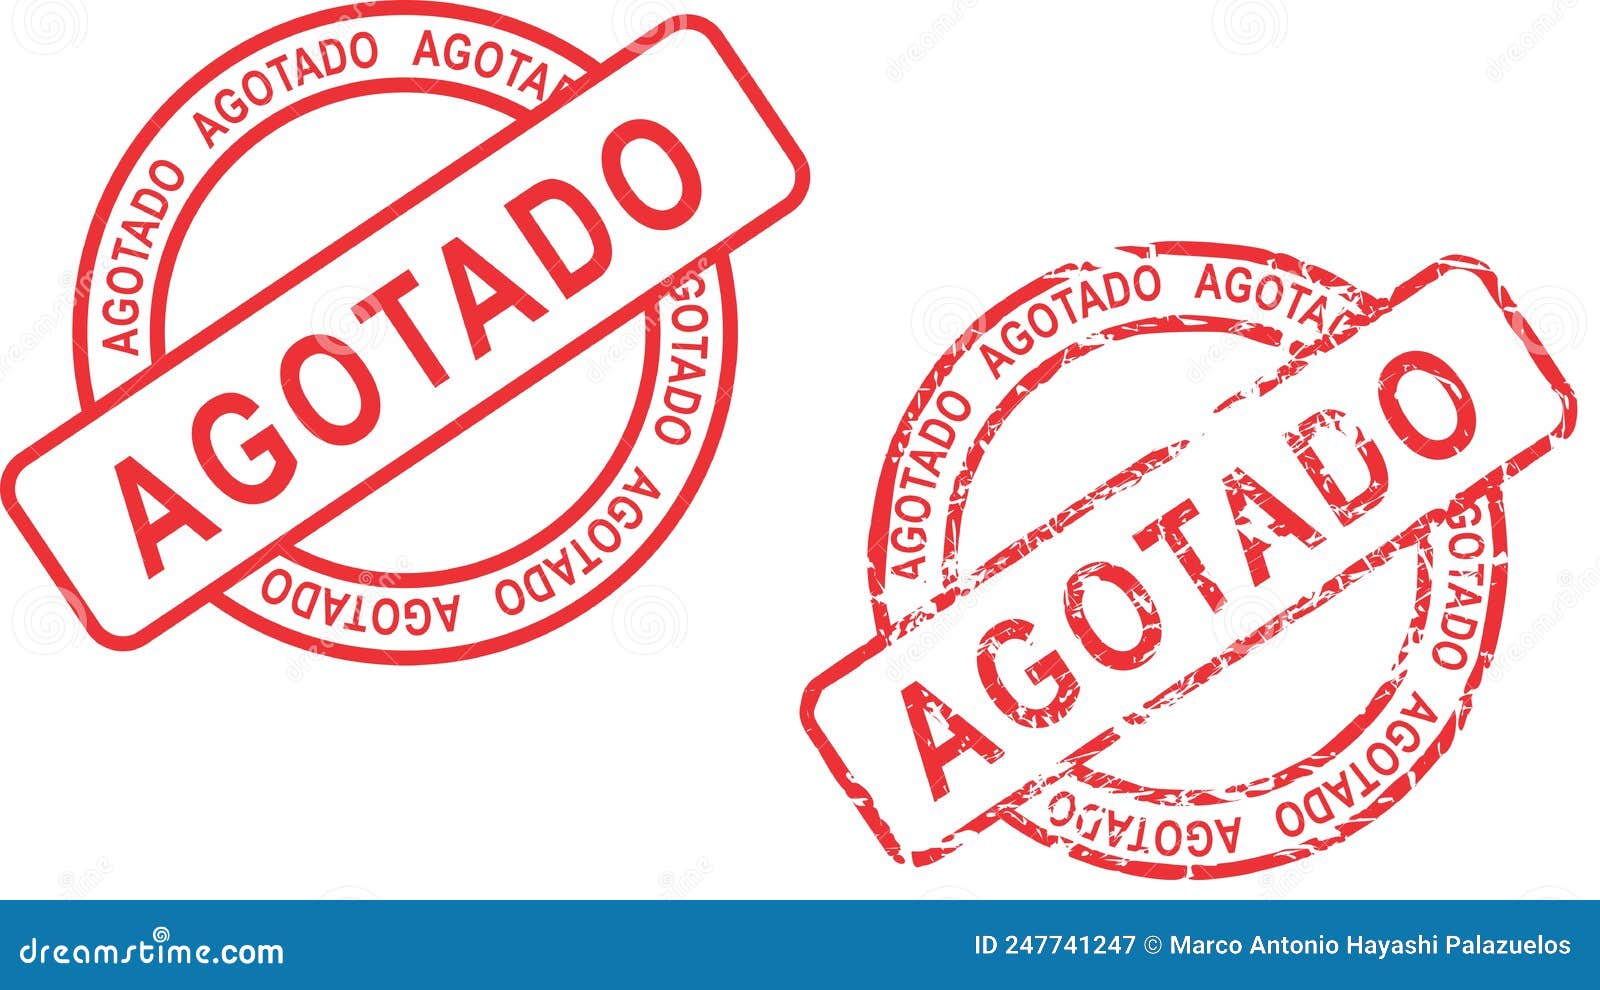 agotado spanish stamp sticker in  format